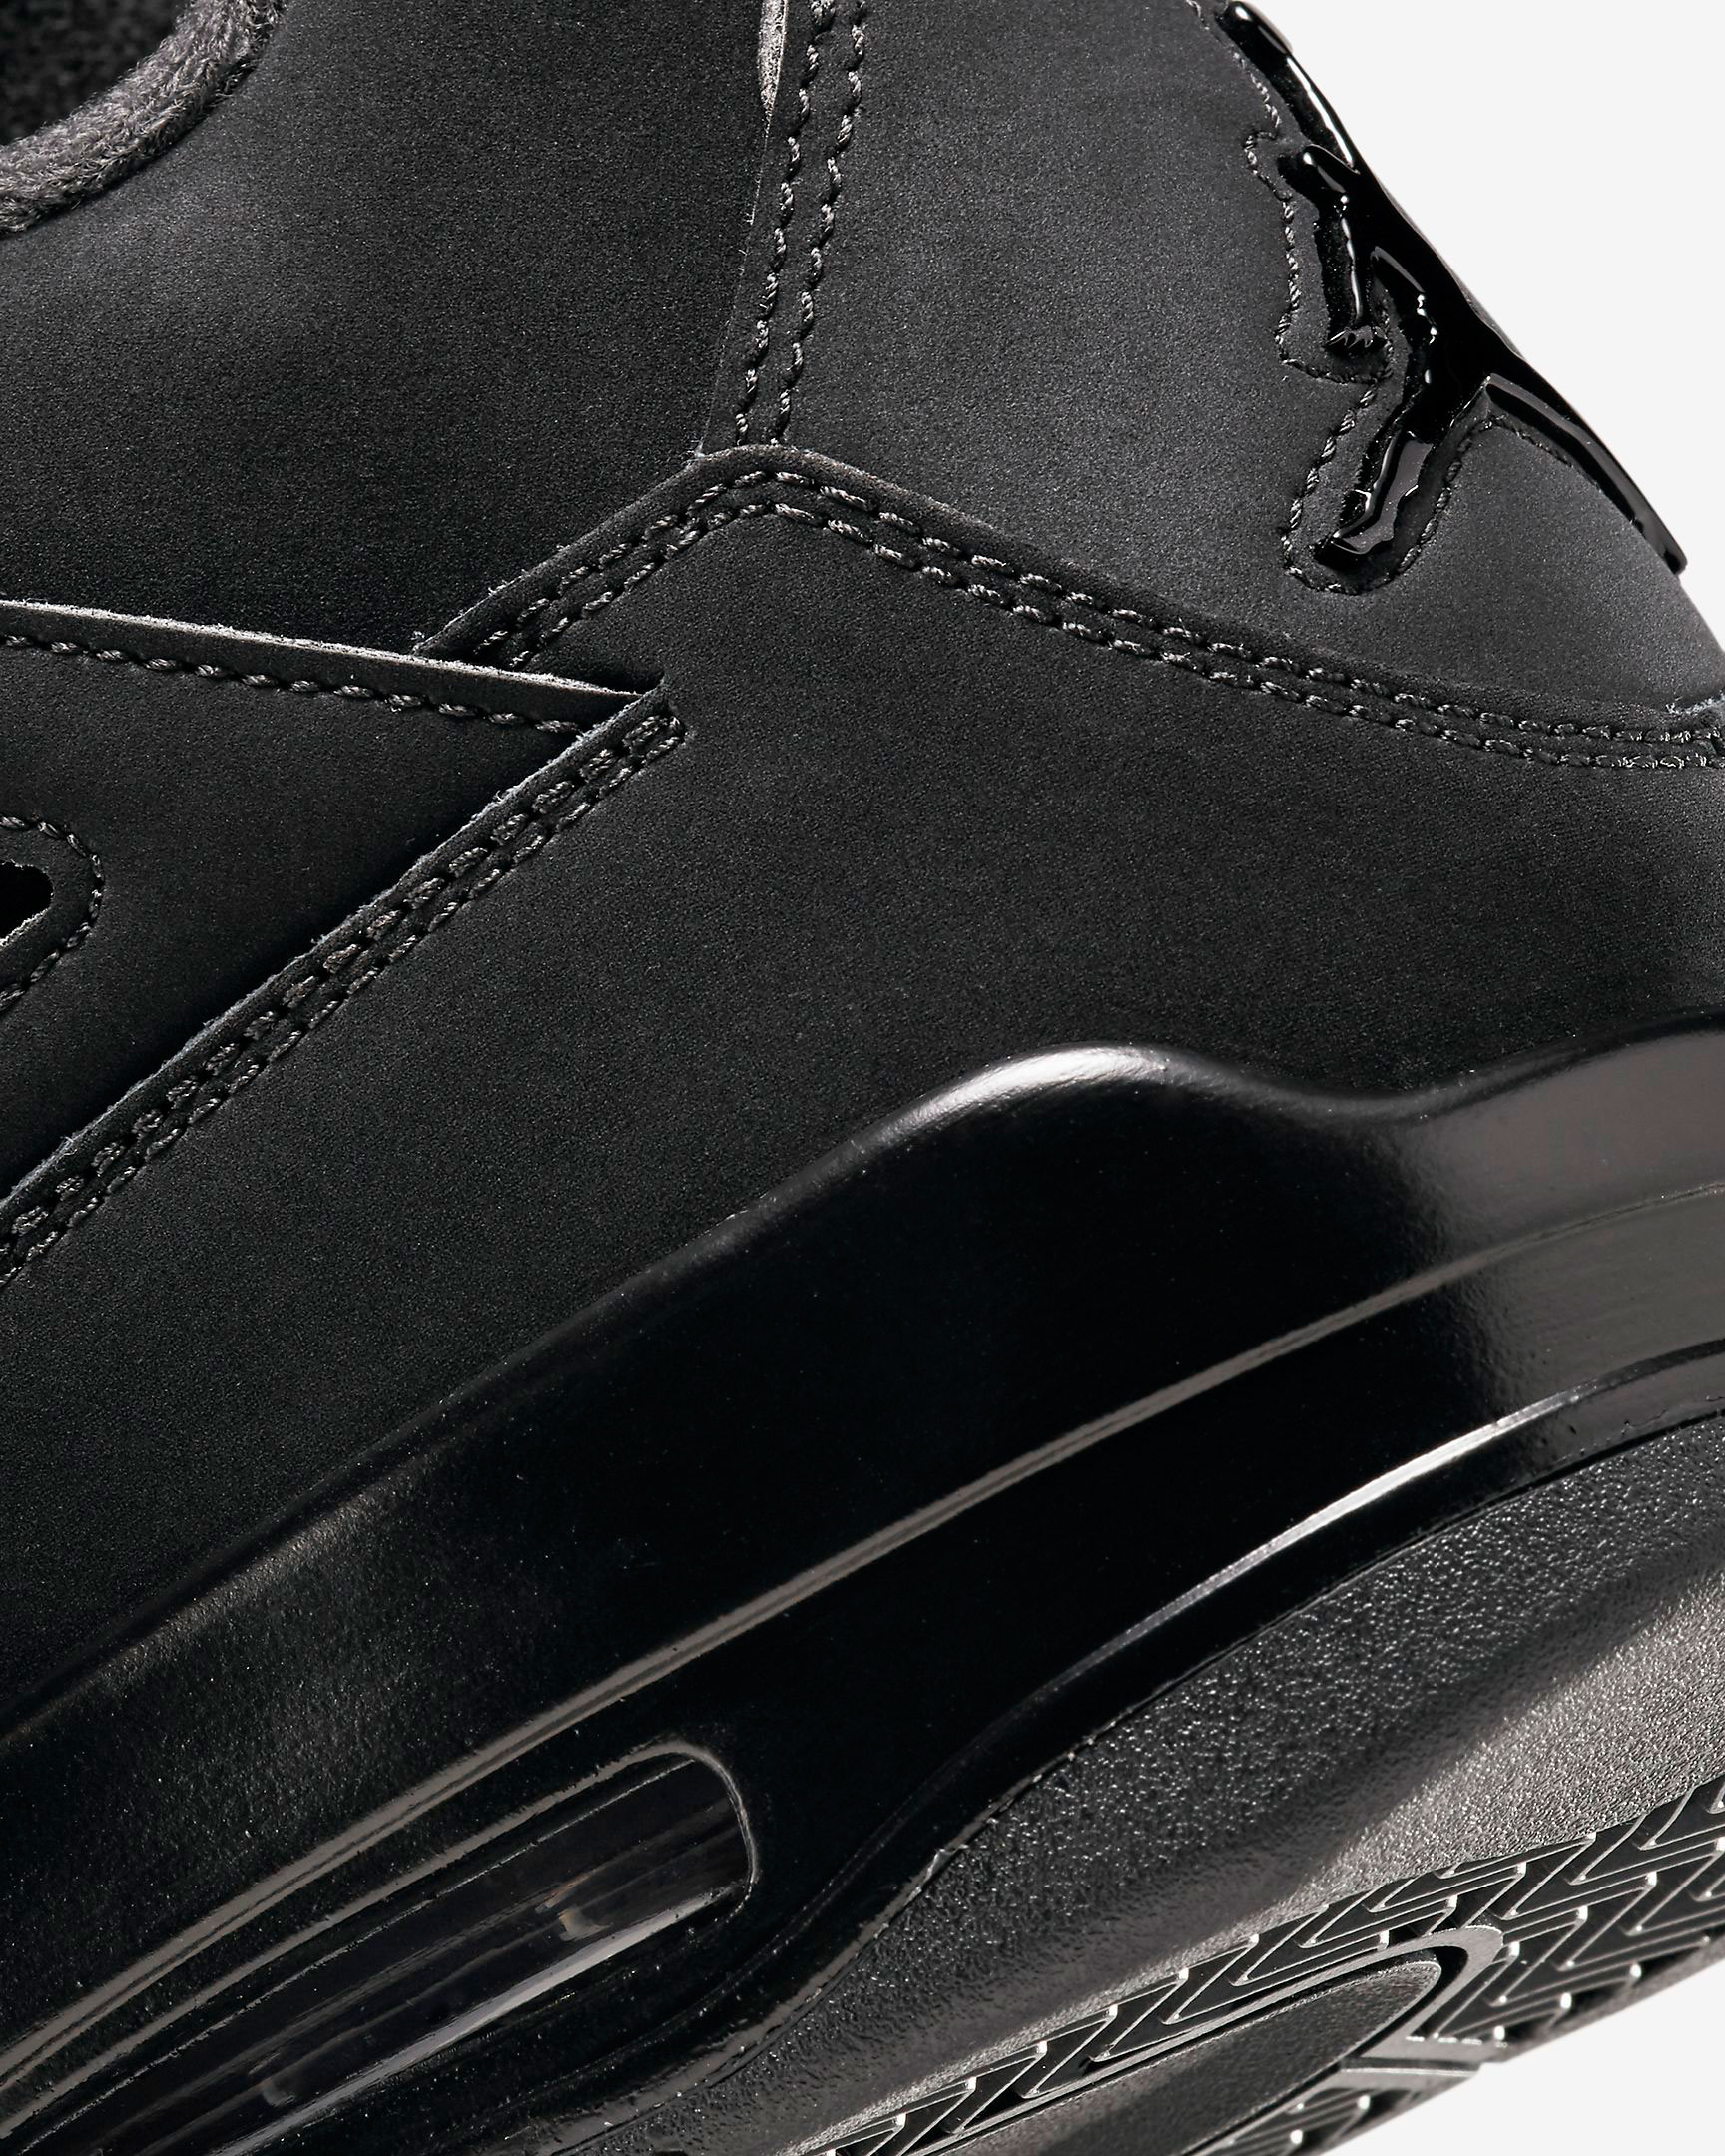 Where to Buy the Air Jordan 4 Black Cat 2020 | SneakerFits.com